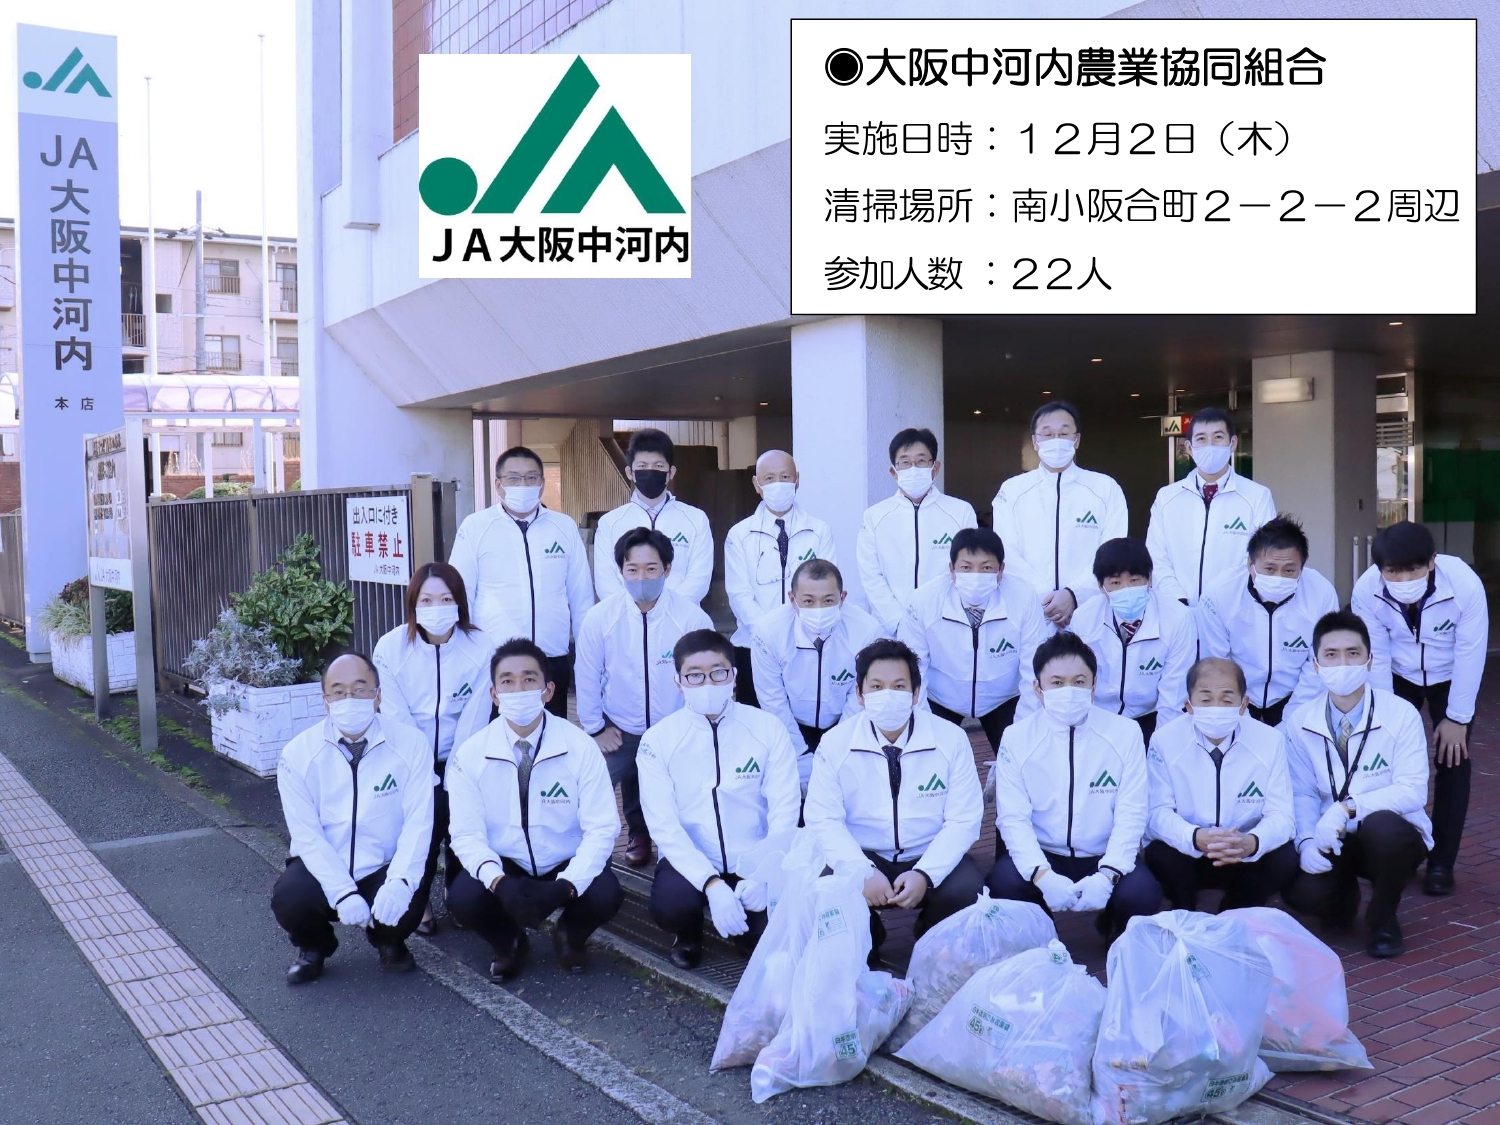 JA大阪中河内農業協同組合の清掃画像